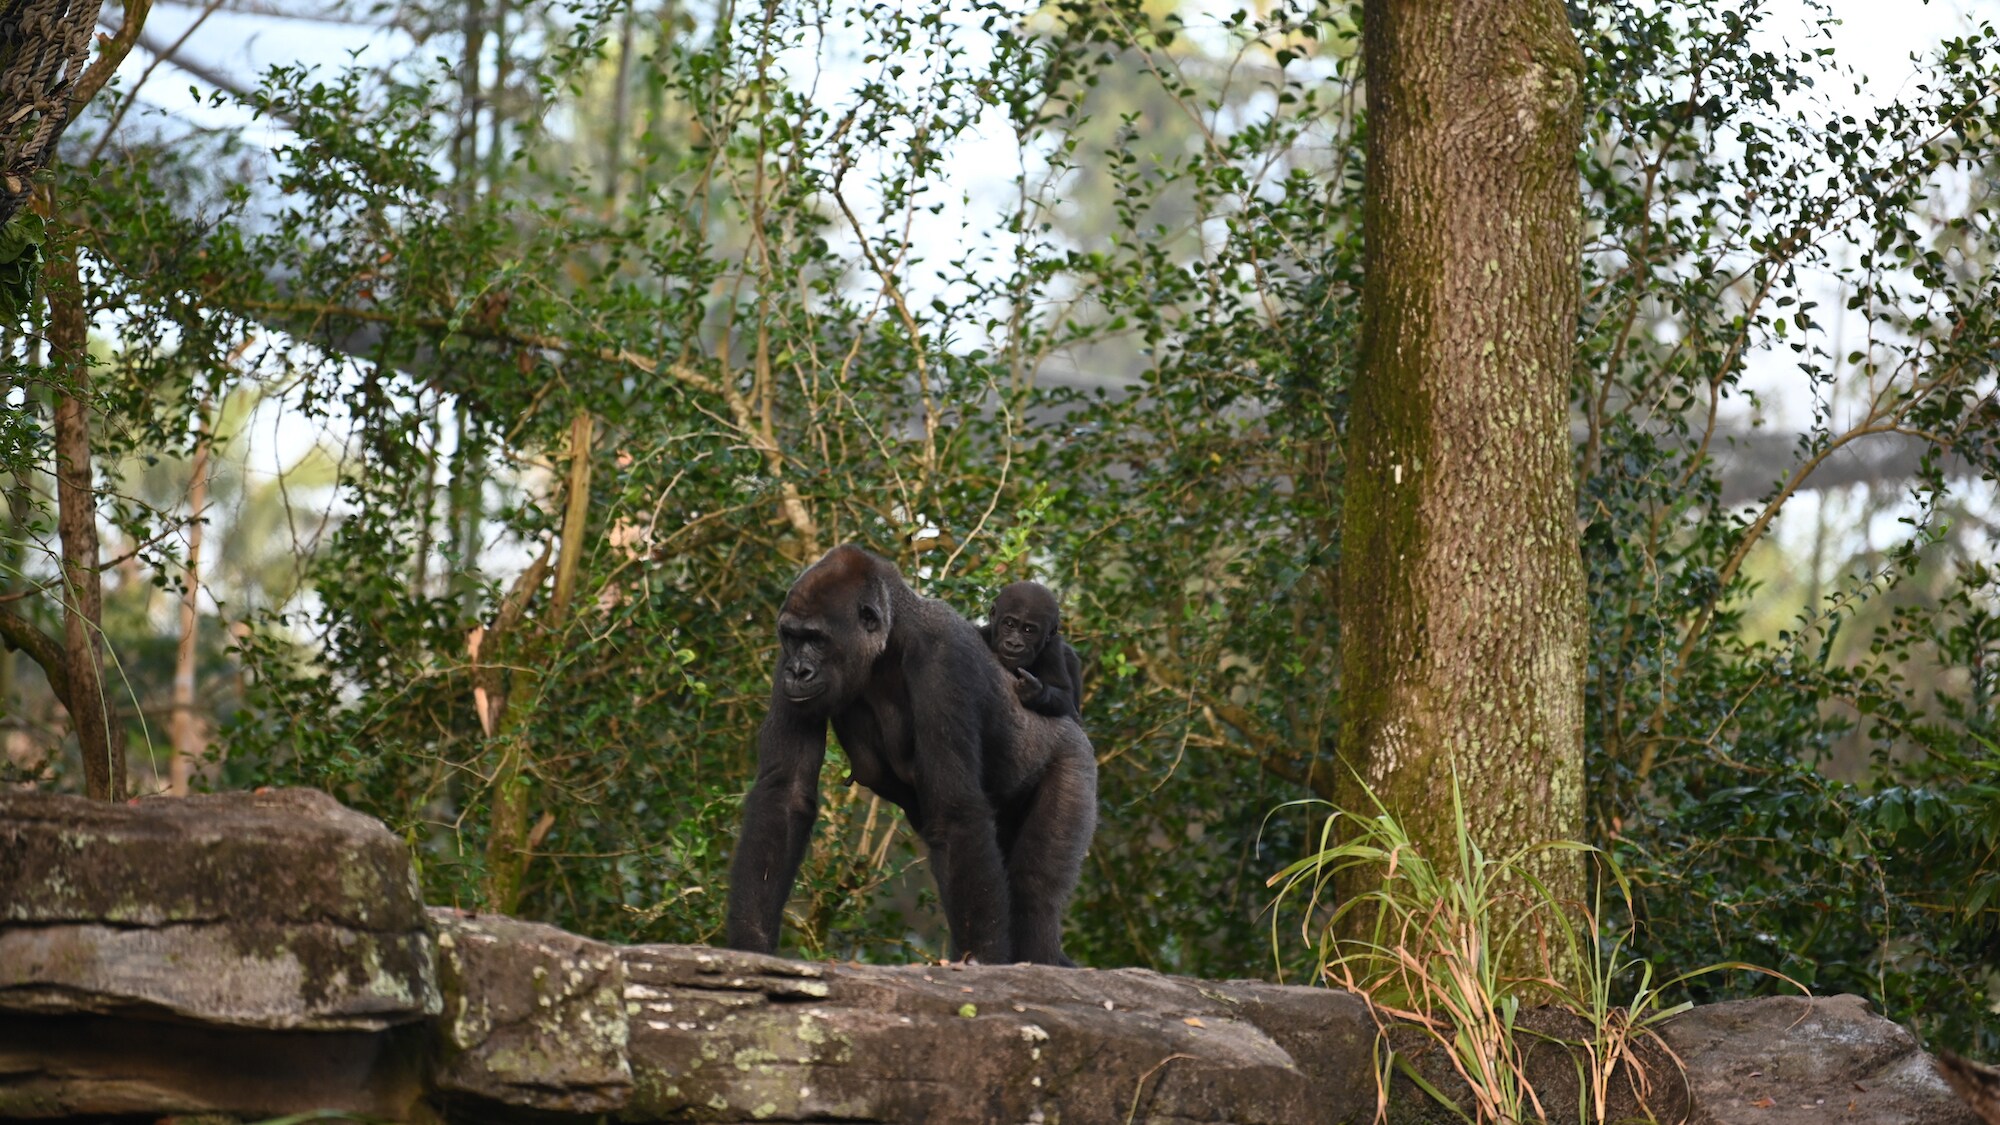 Kashata the Gorilla holding baby Grace the Gorilla. (National Geographic/Gene Page)